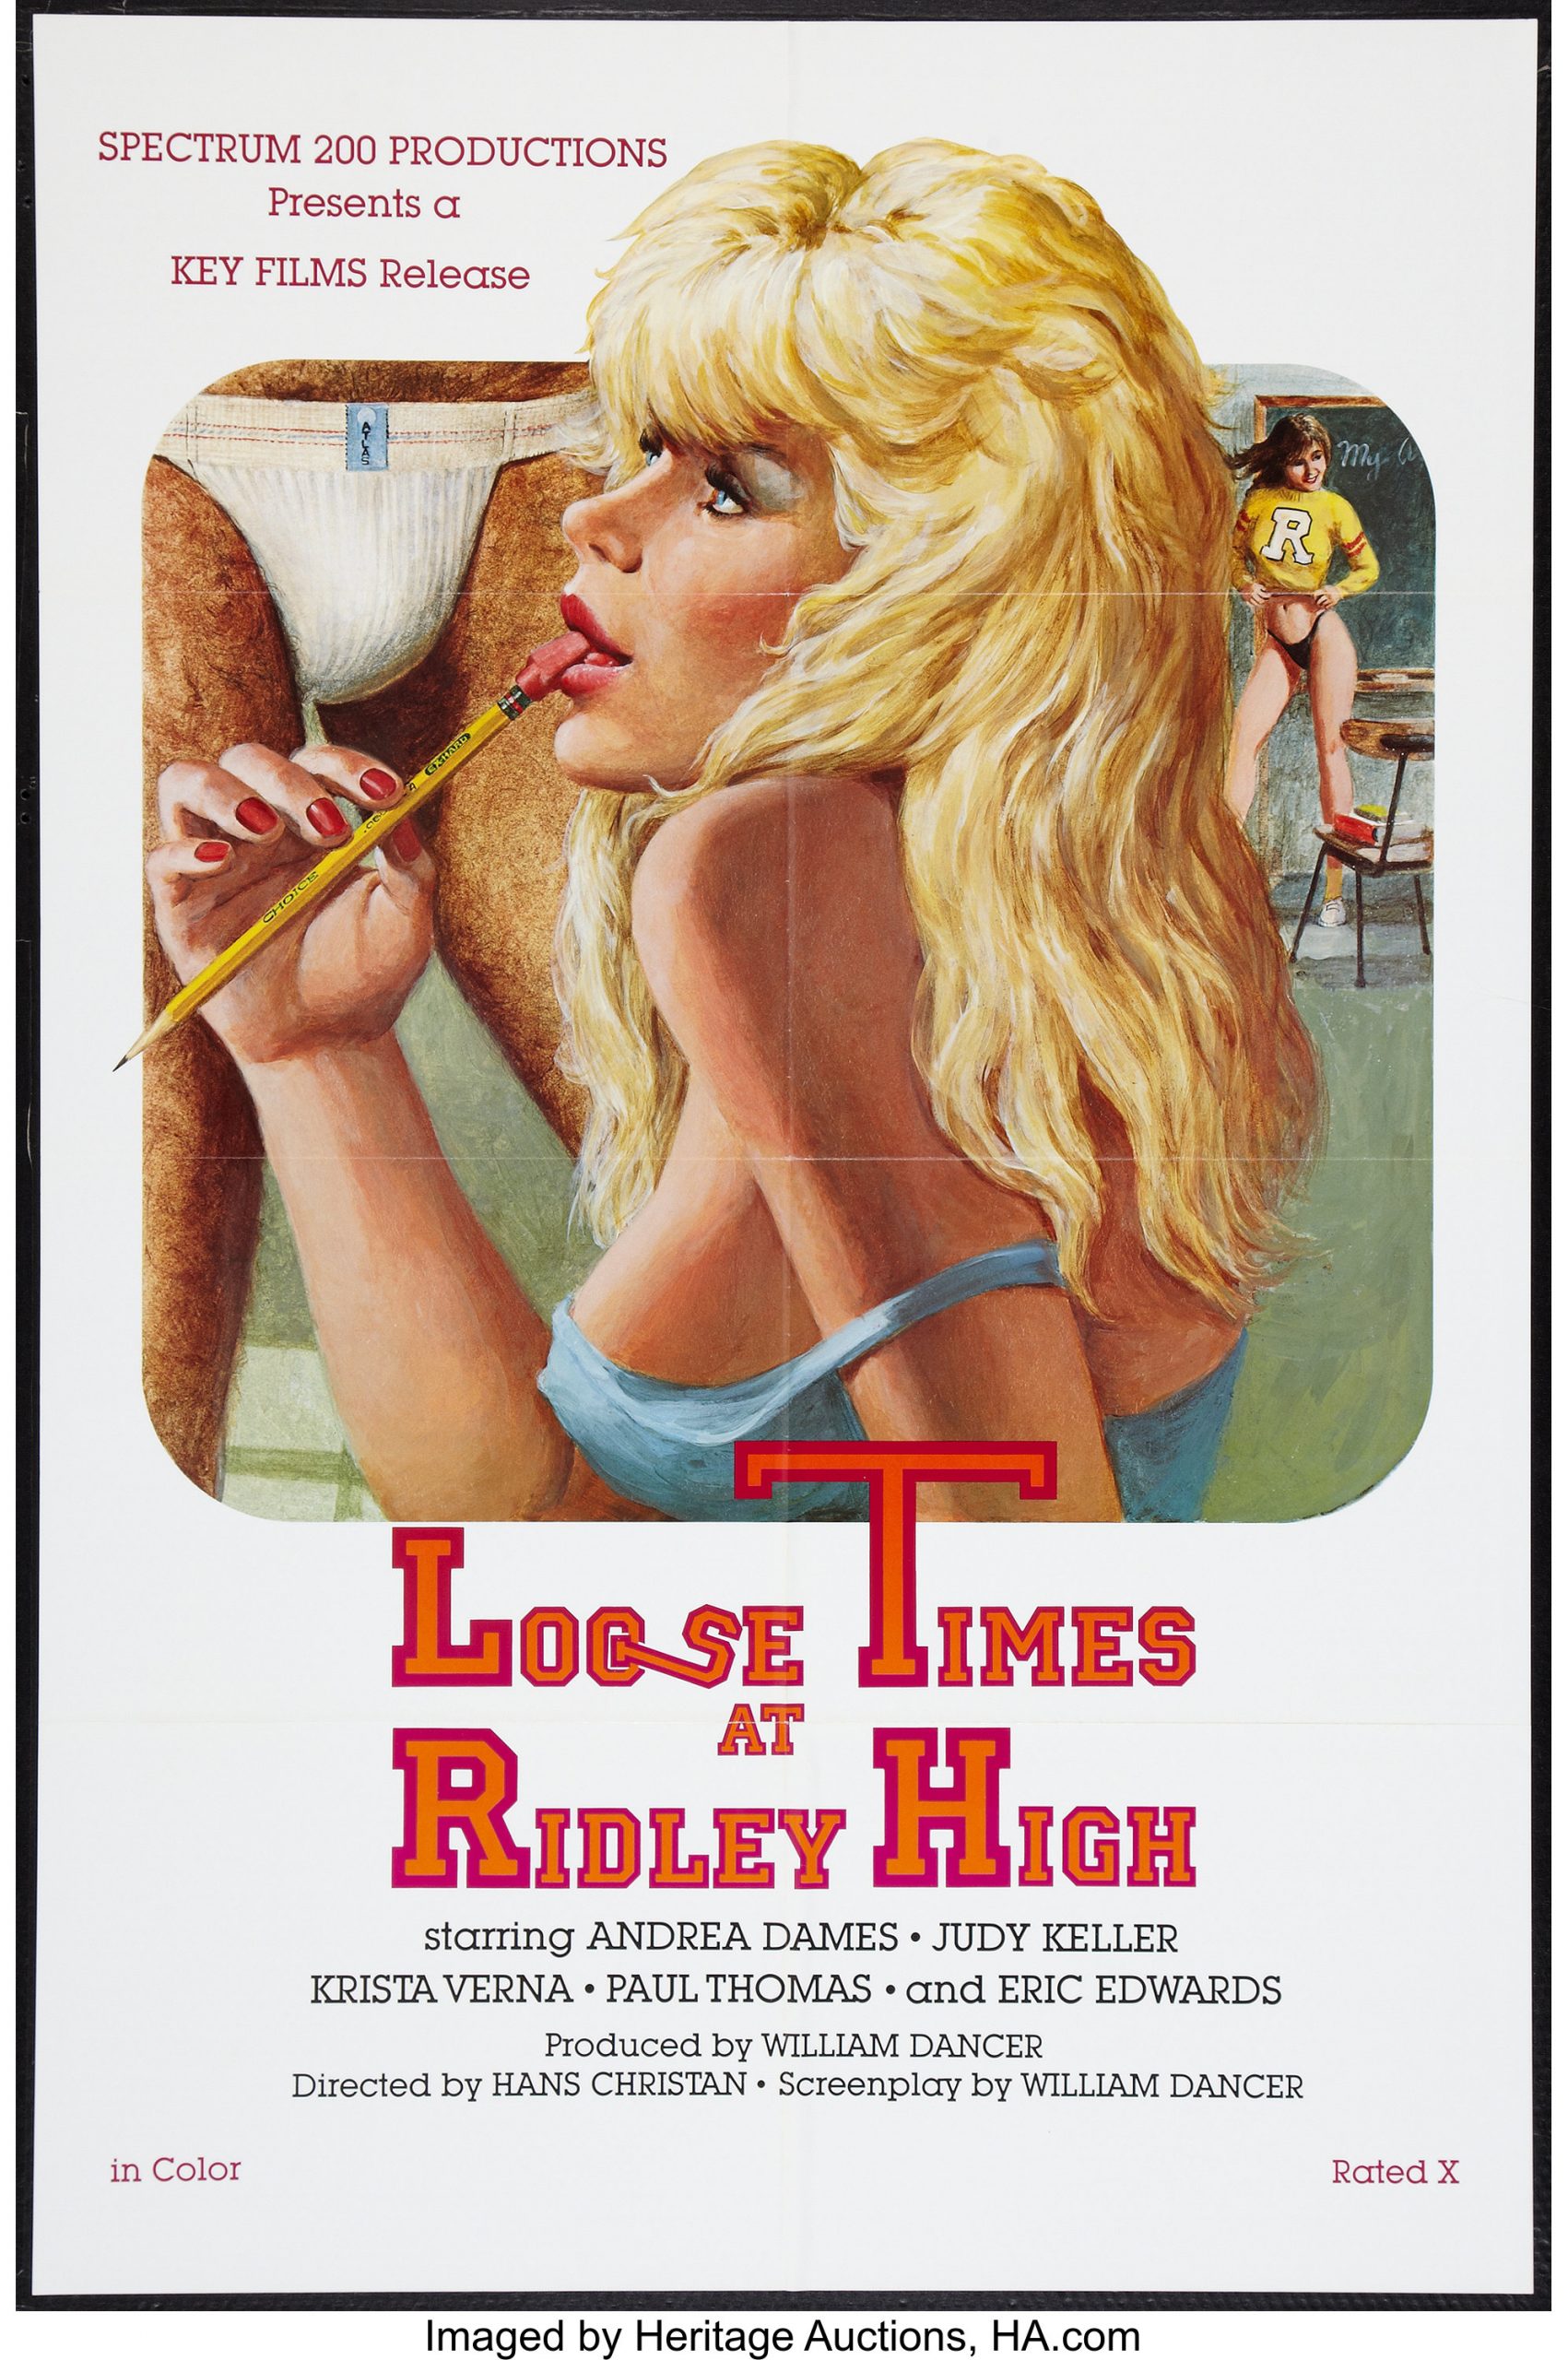 Loose Times at Ridley High (1984) - Original Poster - vintagepornfun.com